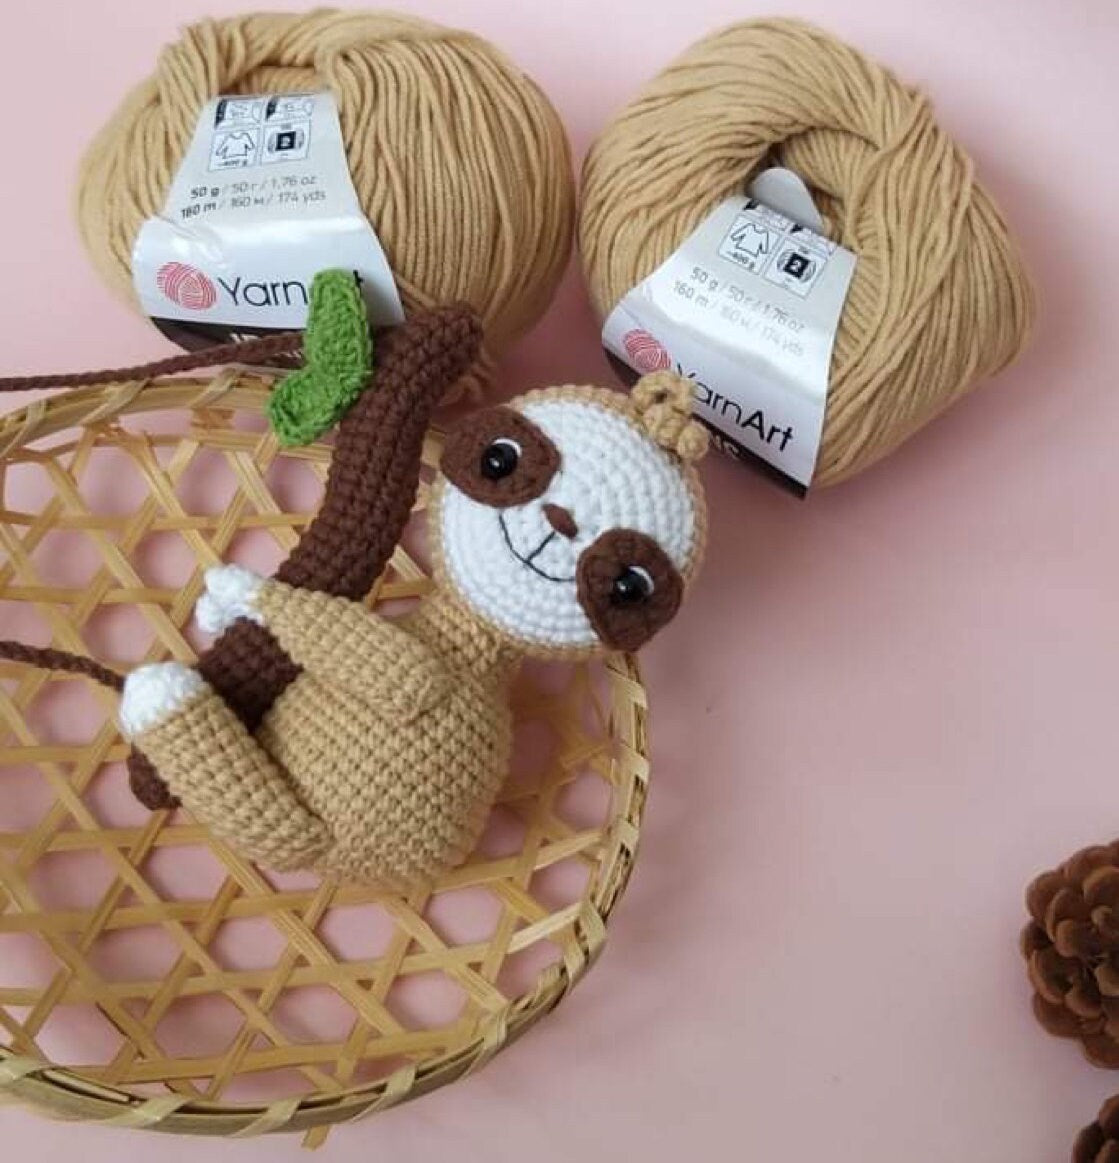 Rio Handmade sloth crochet car rearview charm, hanging, amigurumi, plushie gift